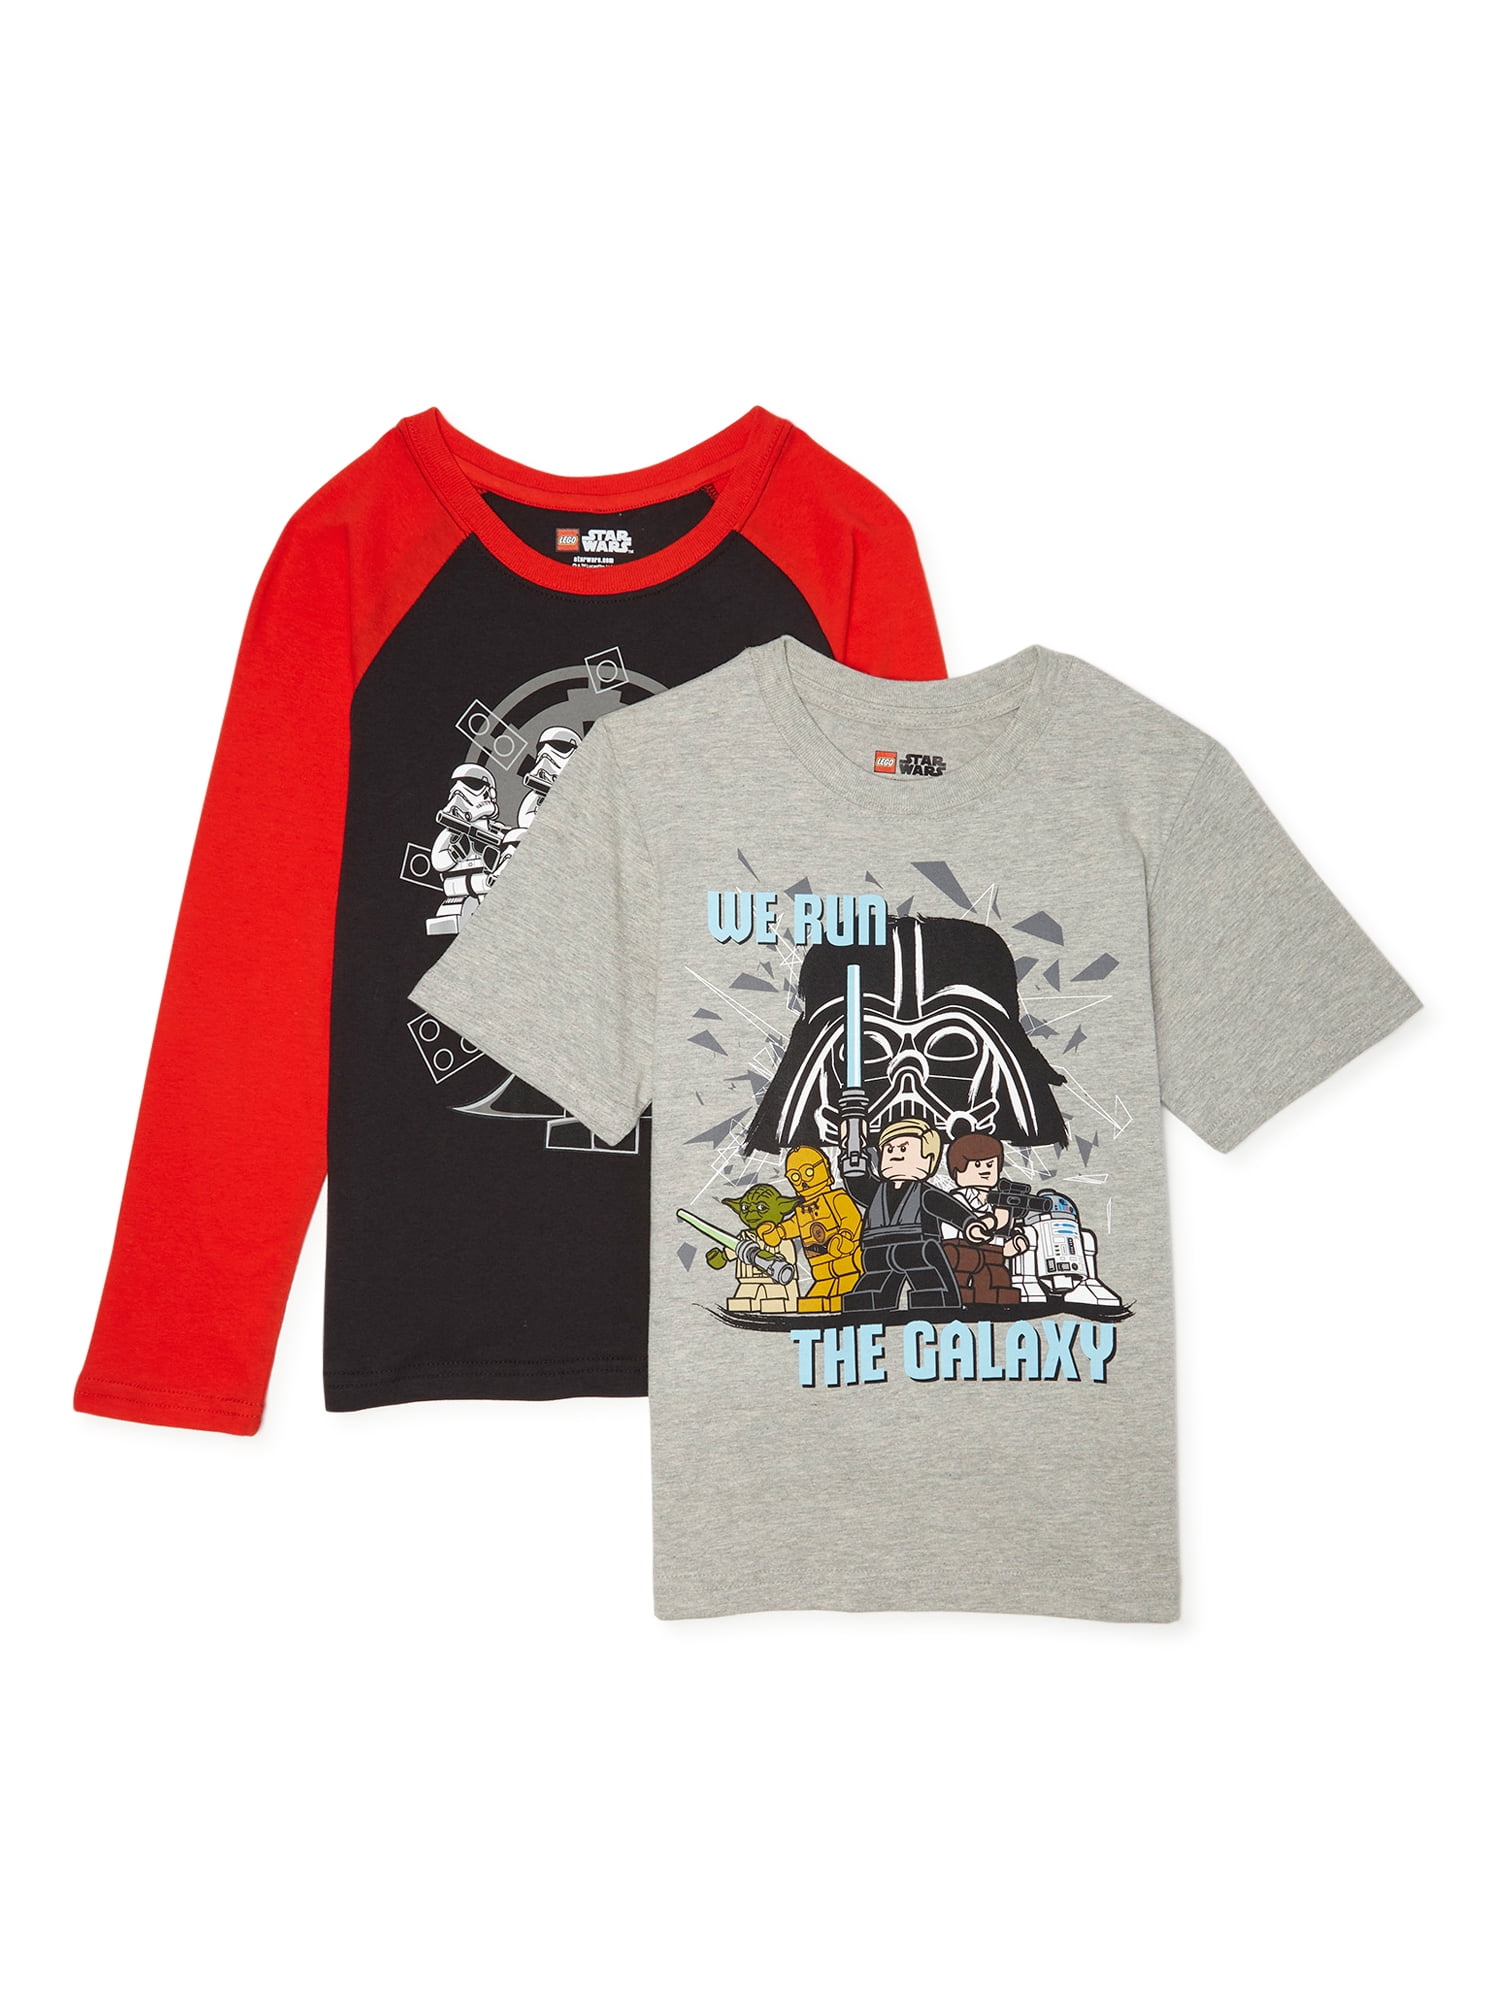 Lego STAR WARS Boys Short Sleeve T-shirt/Top Official 4-10 yrs 